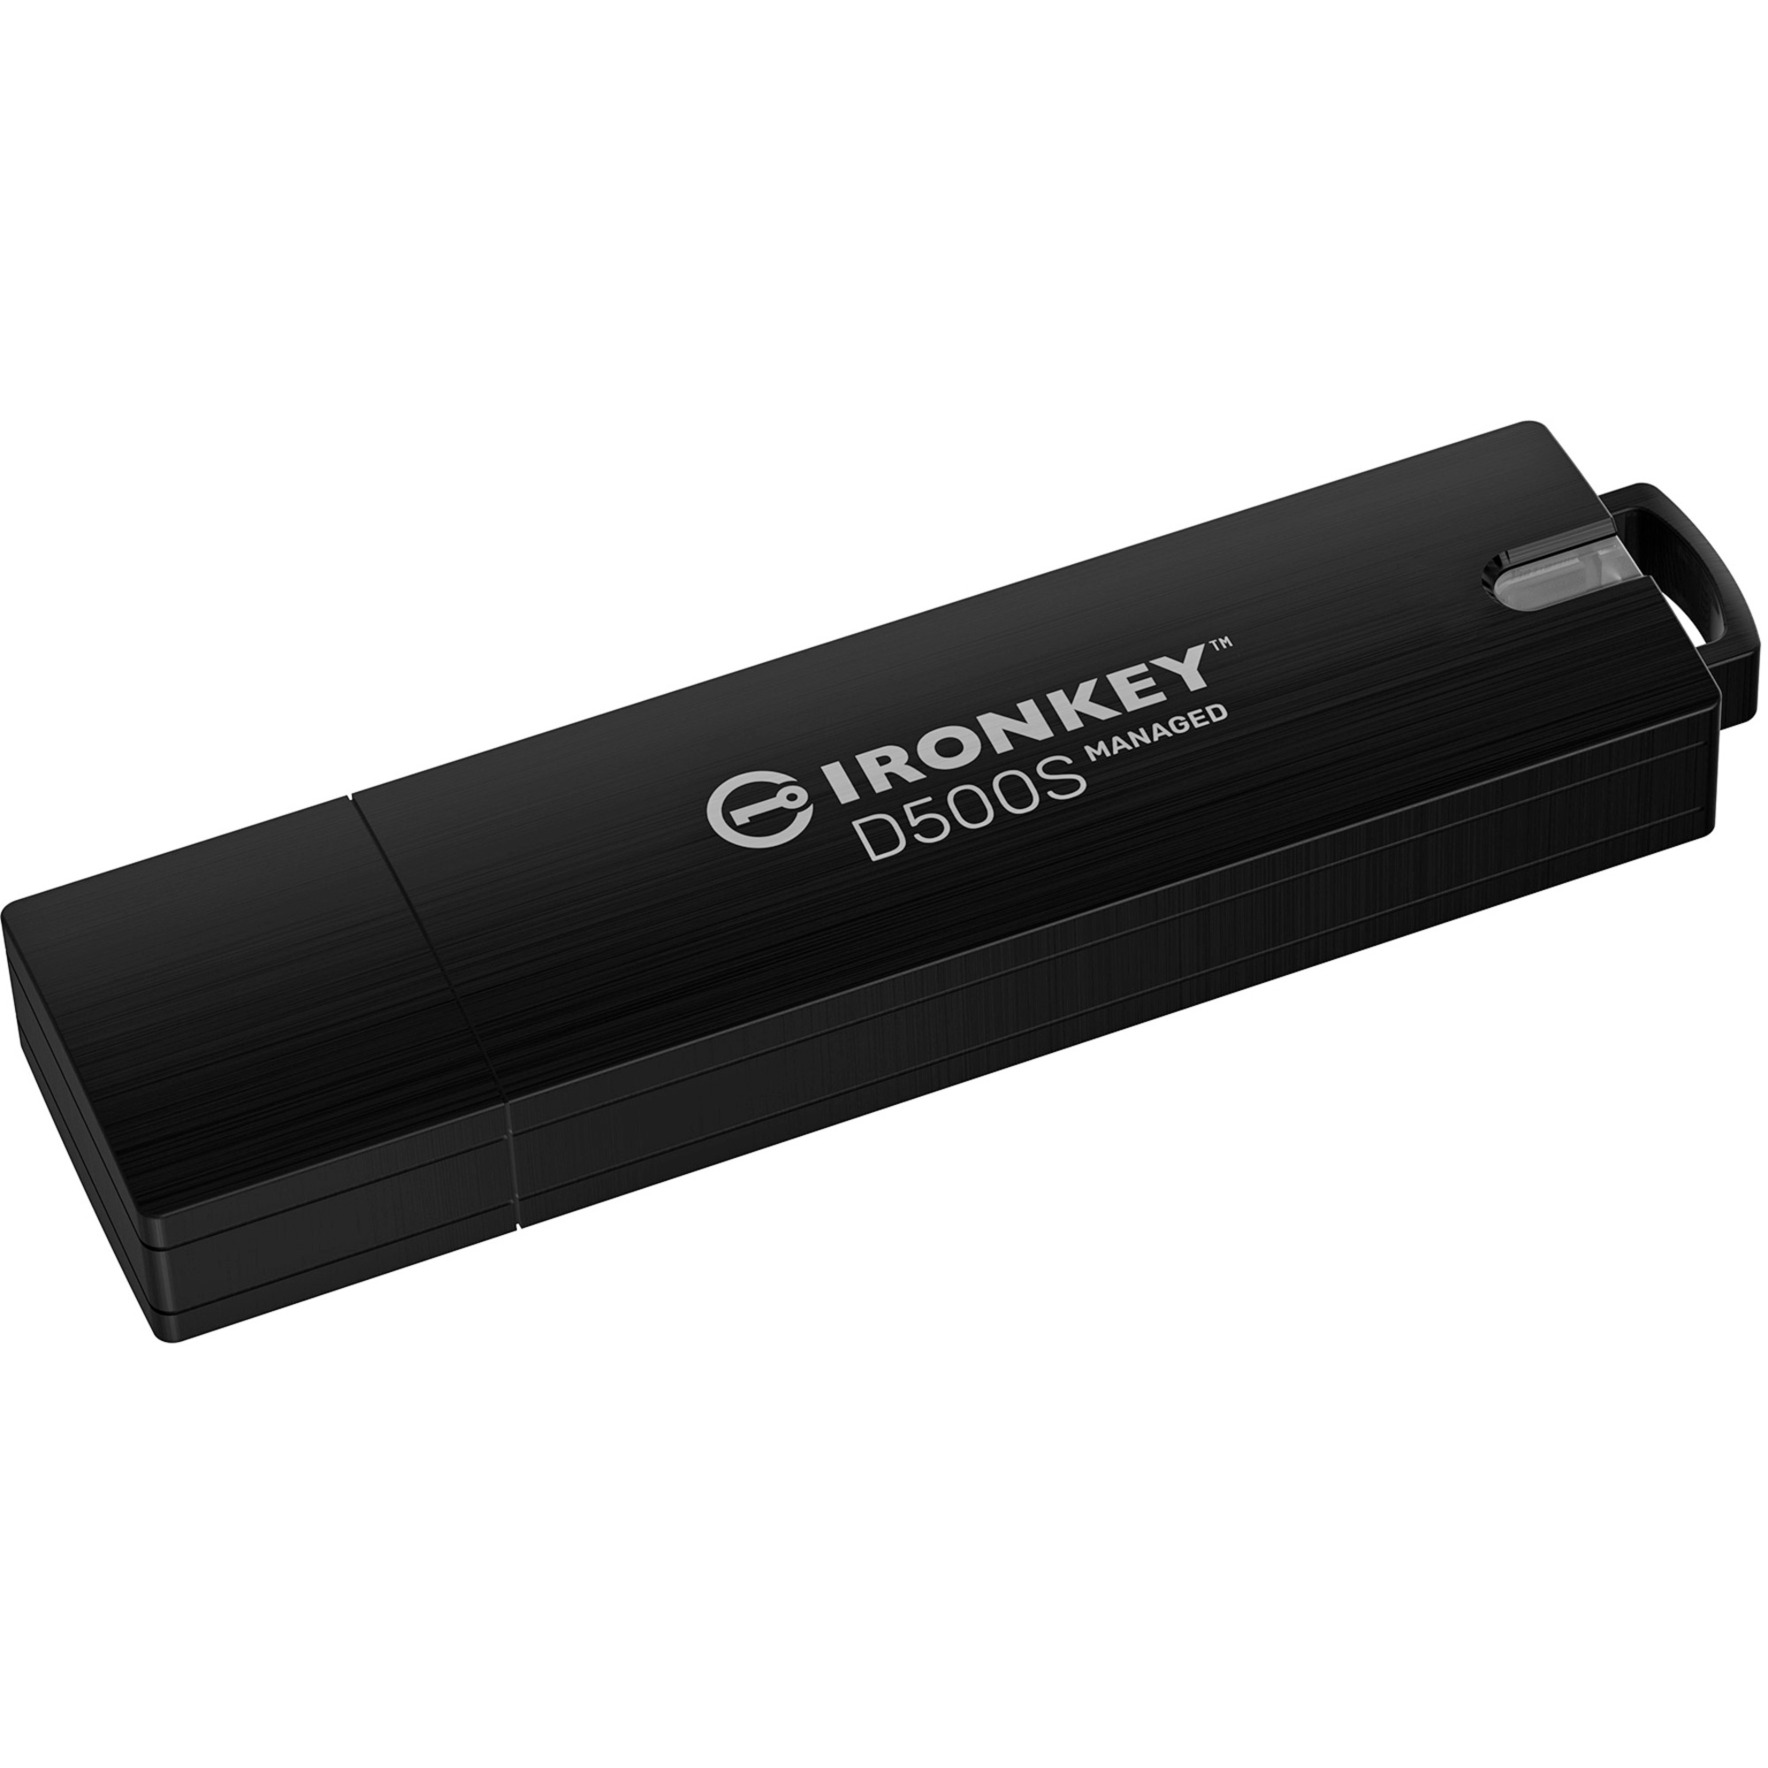 IronKey D500SM 64 GB, USB-Stick von Kingston